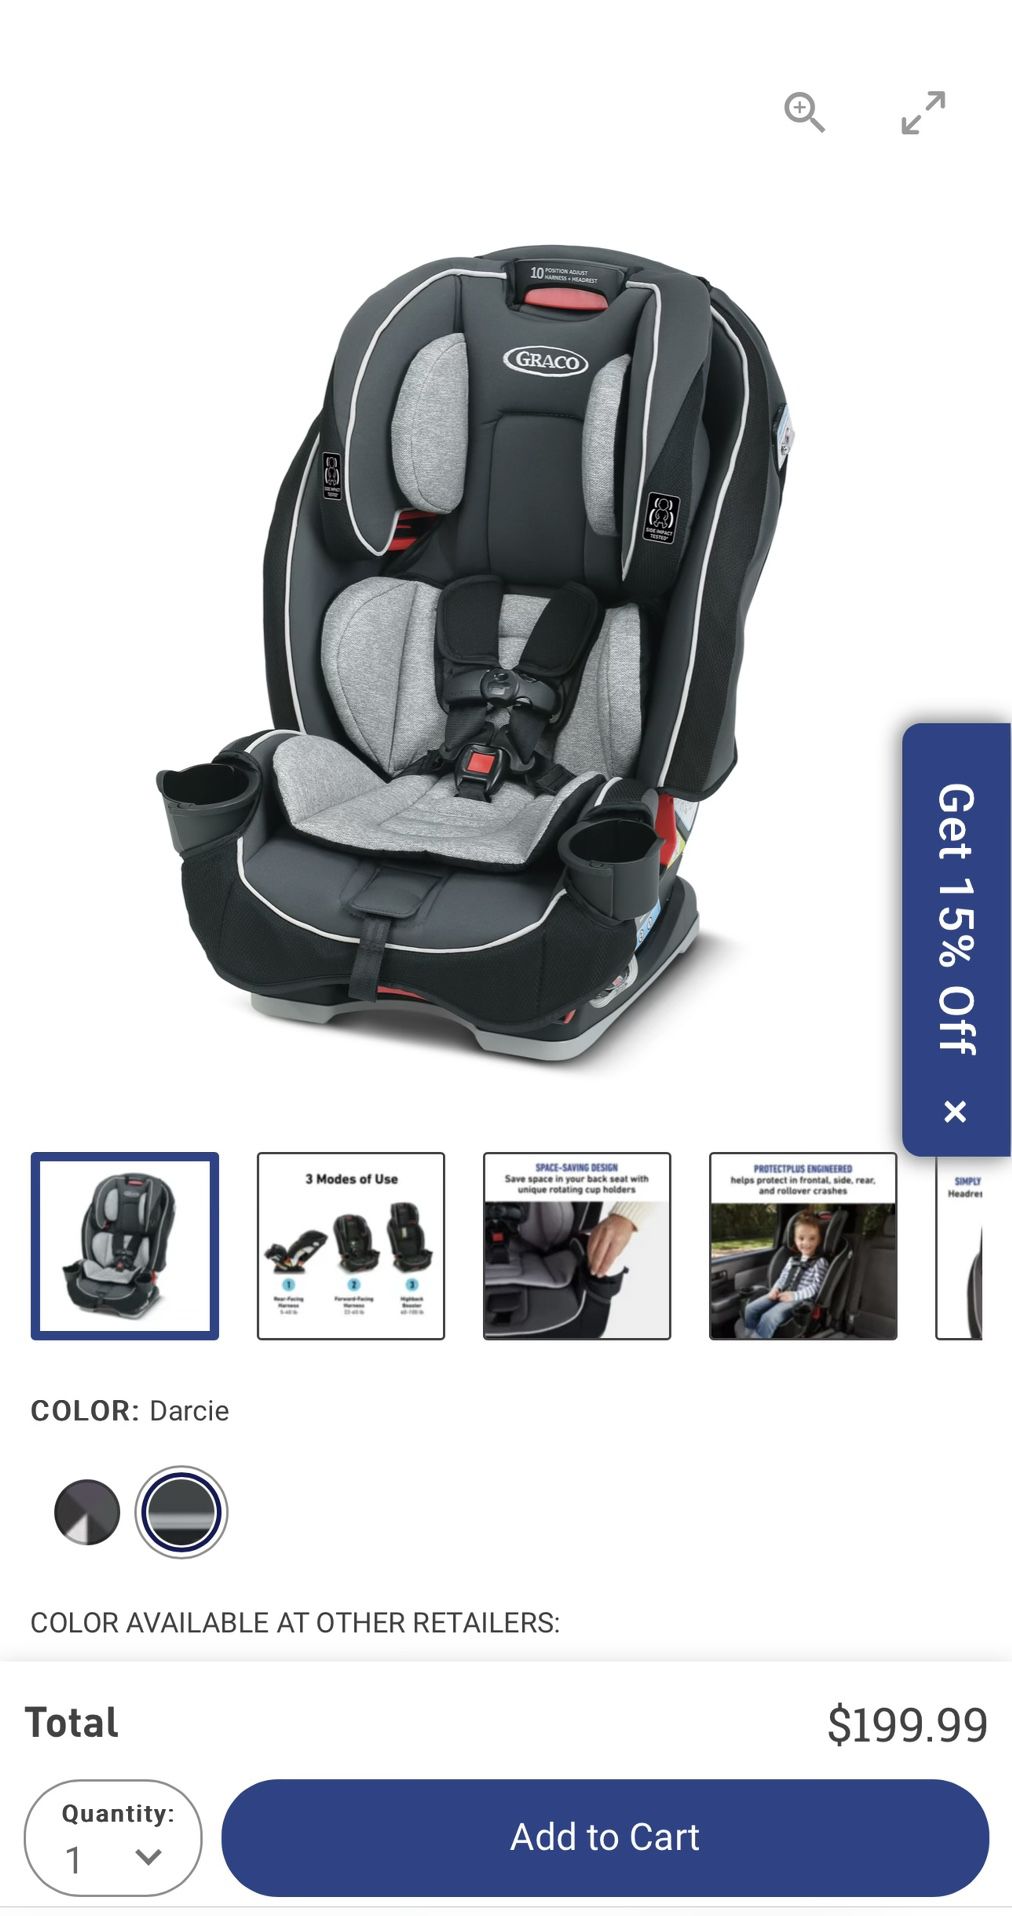 Graco Slimfit LX Baby Car Seat